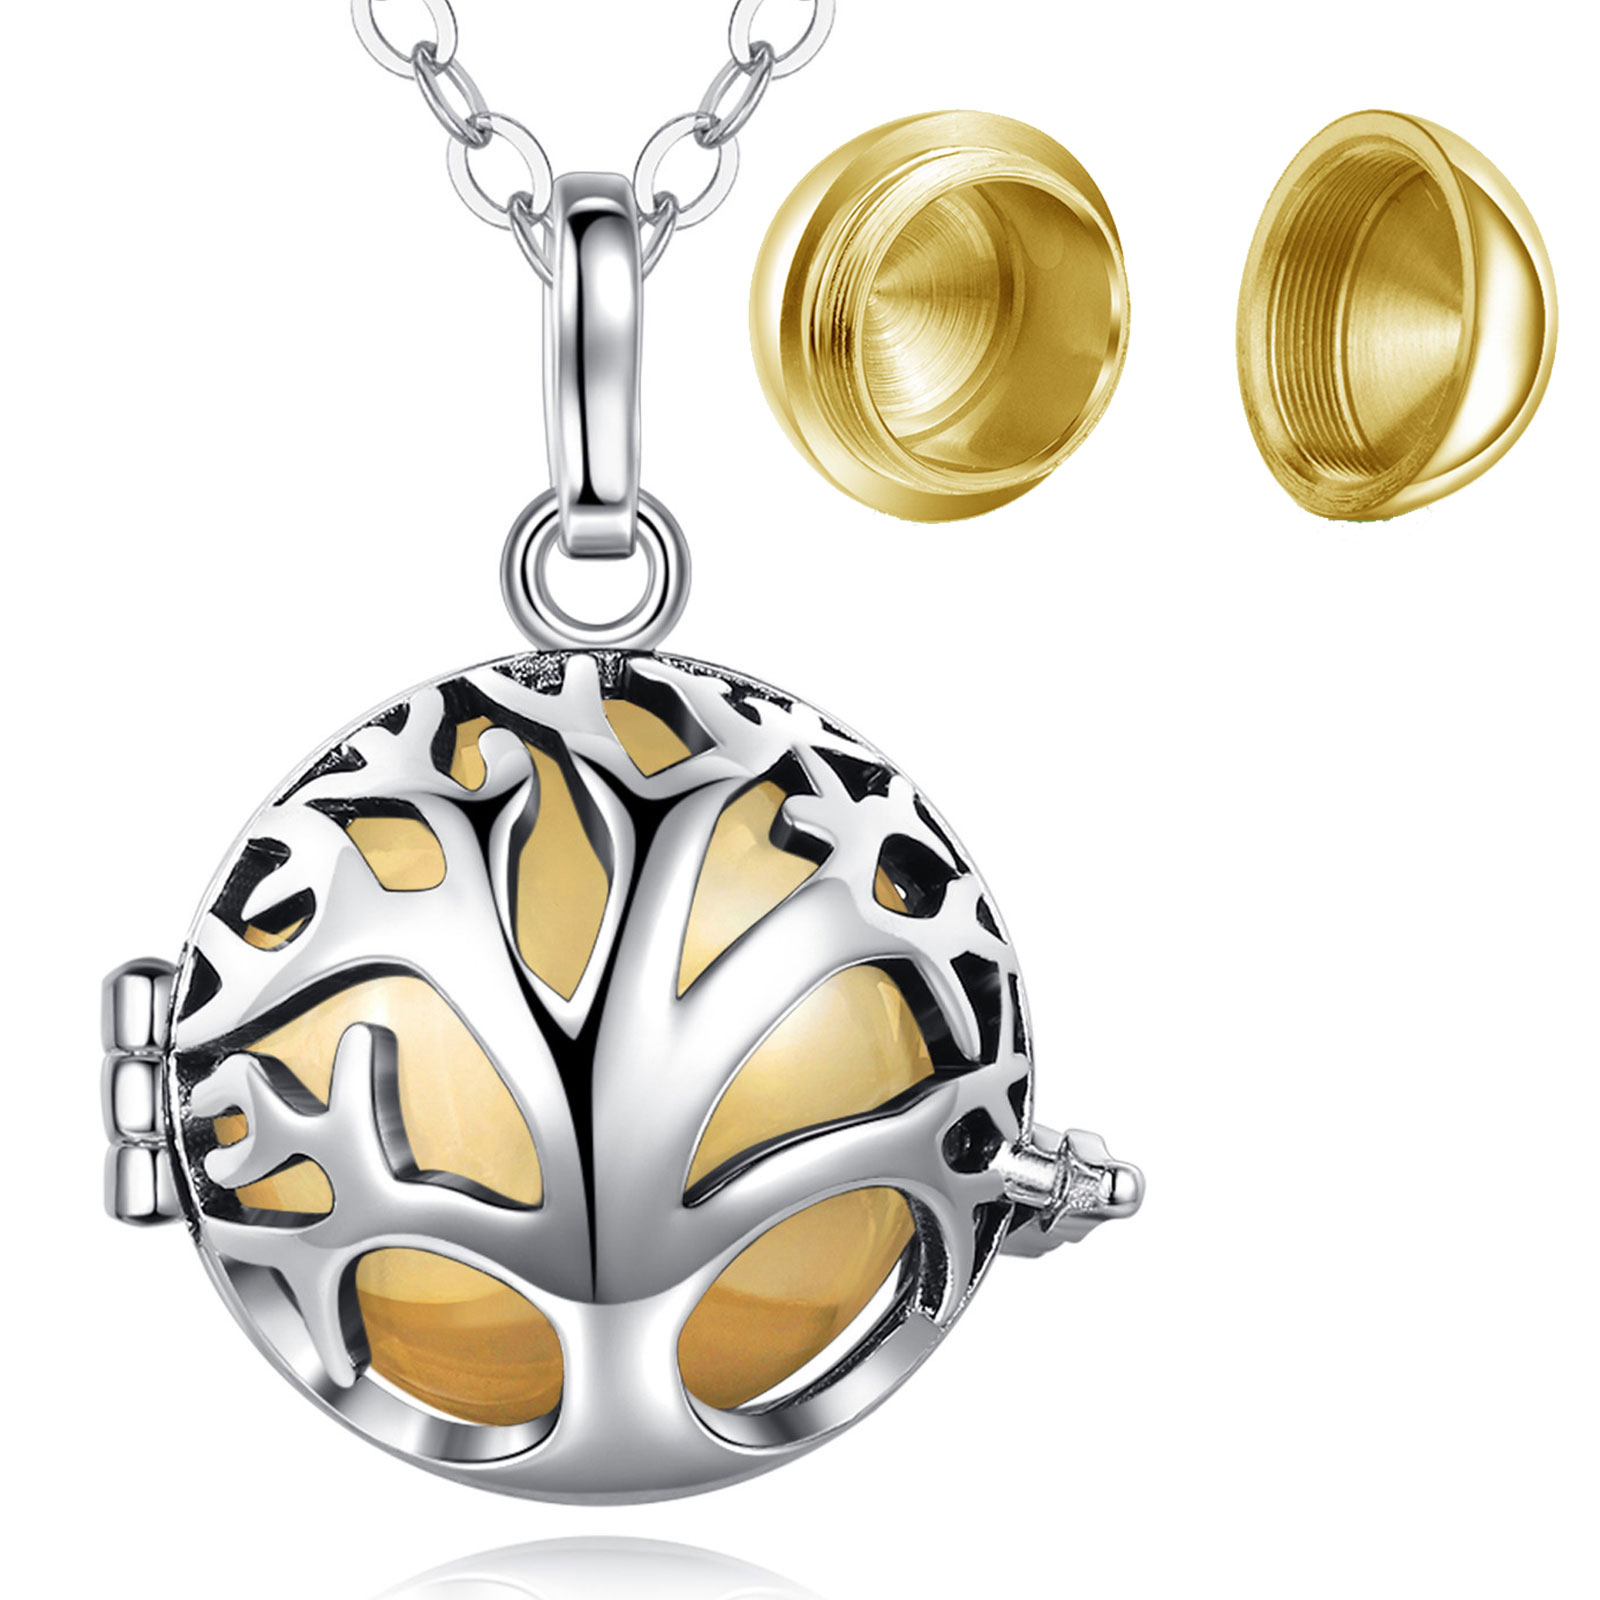 Merryshine Cremation Jewelry Hollow Cage Urns Keepsake Locket Pendant Necklace for Pet Ashes